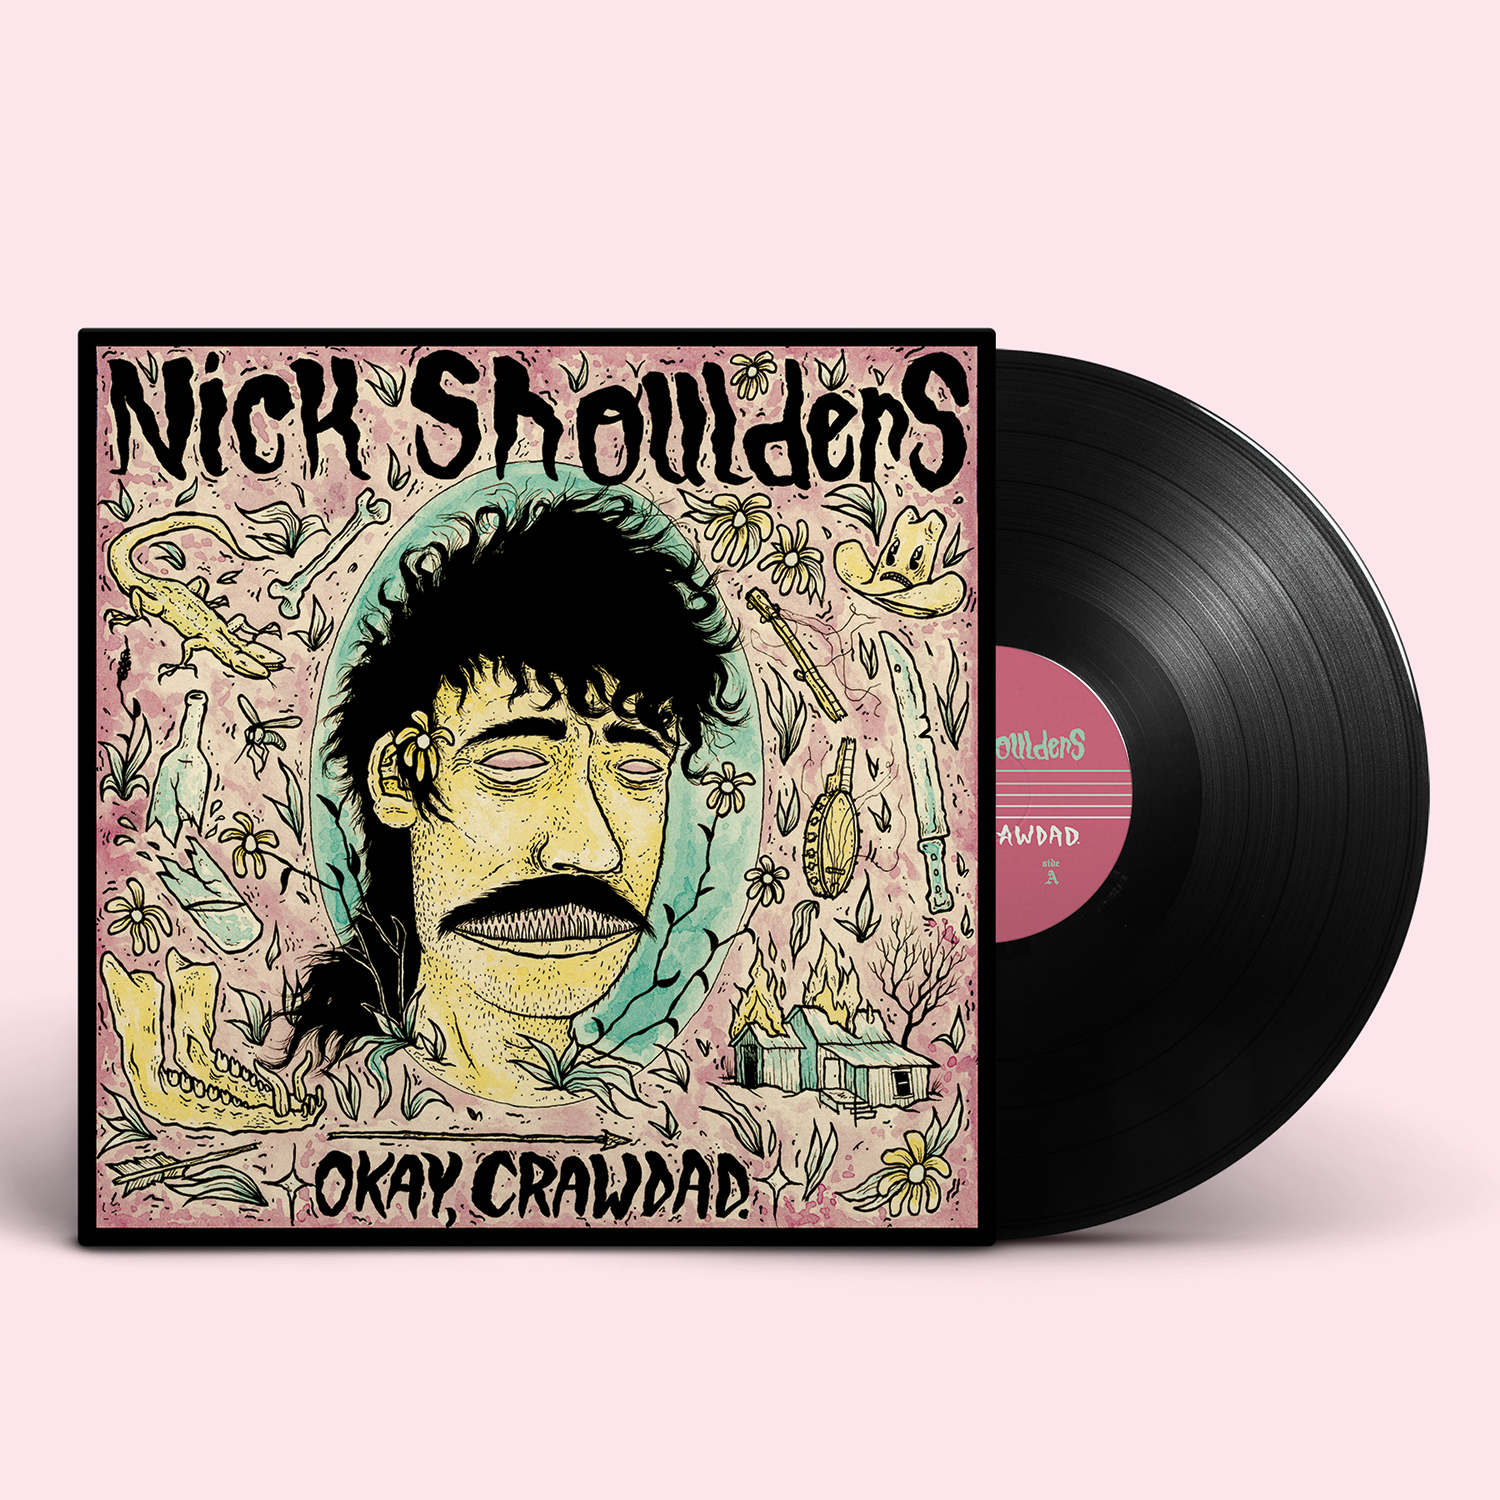 Nick Shoulders - "Okay, Crawdad." 180g Black Vinyl